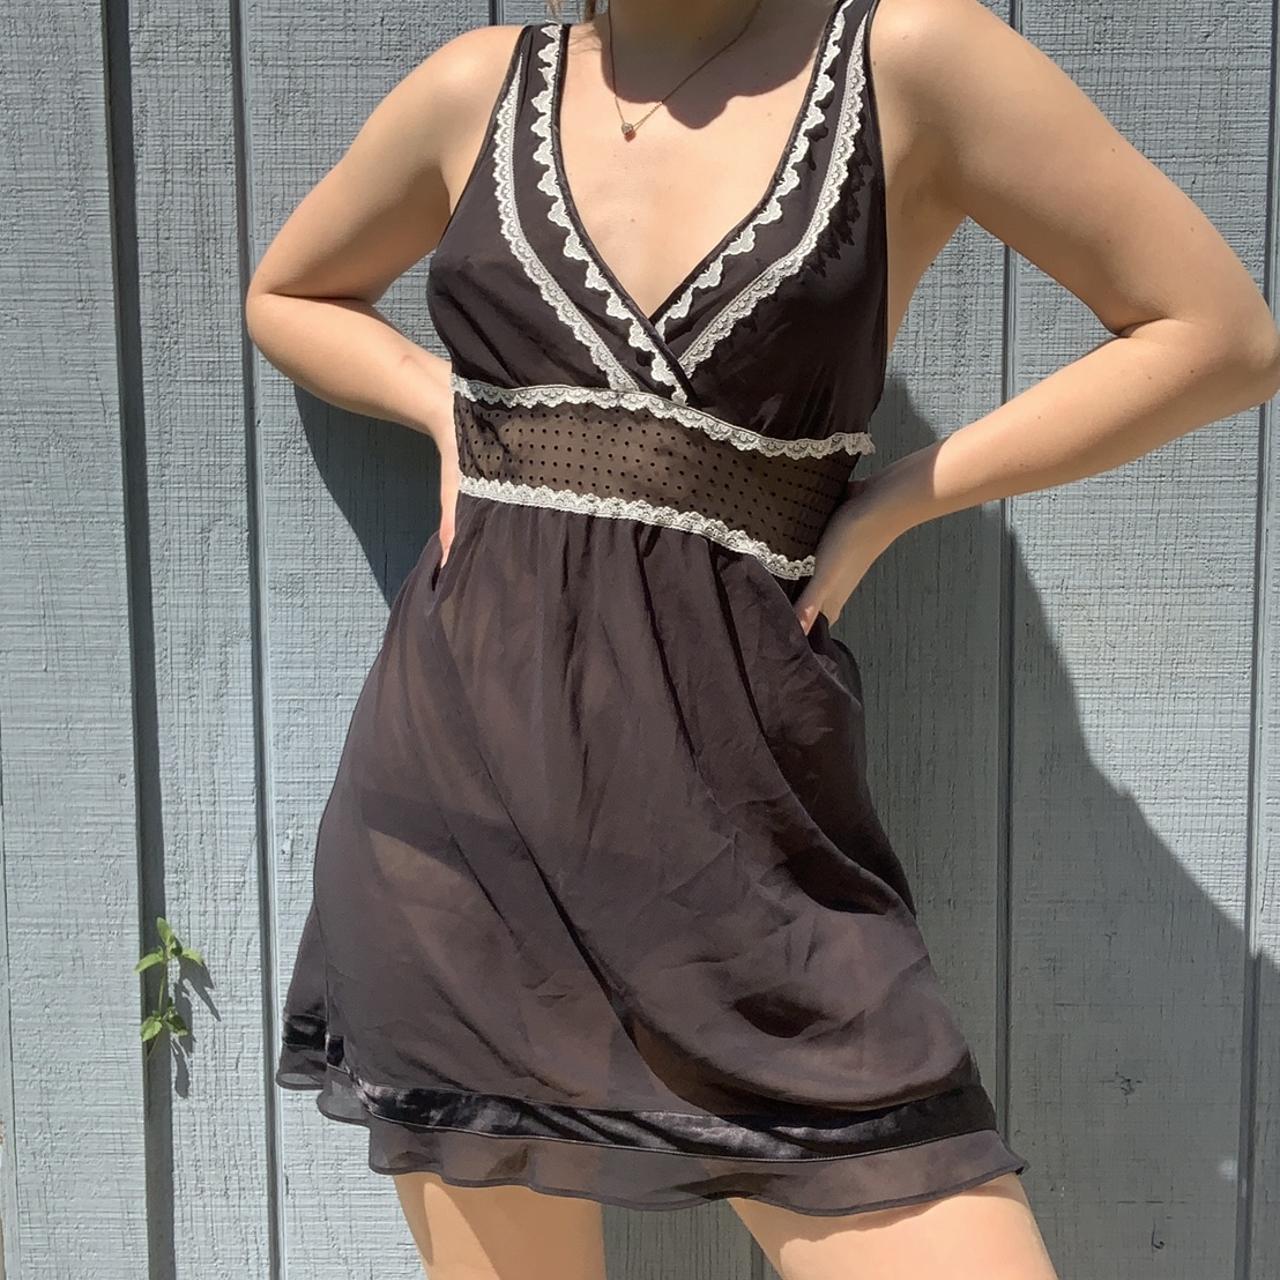 Victoria Secret black mesh lingerie slip🖤 size... - Depop